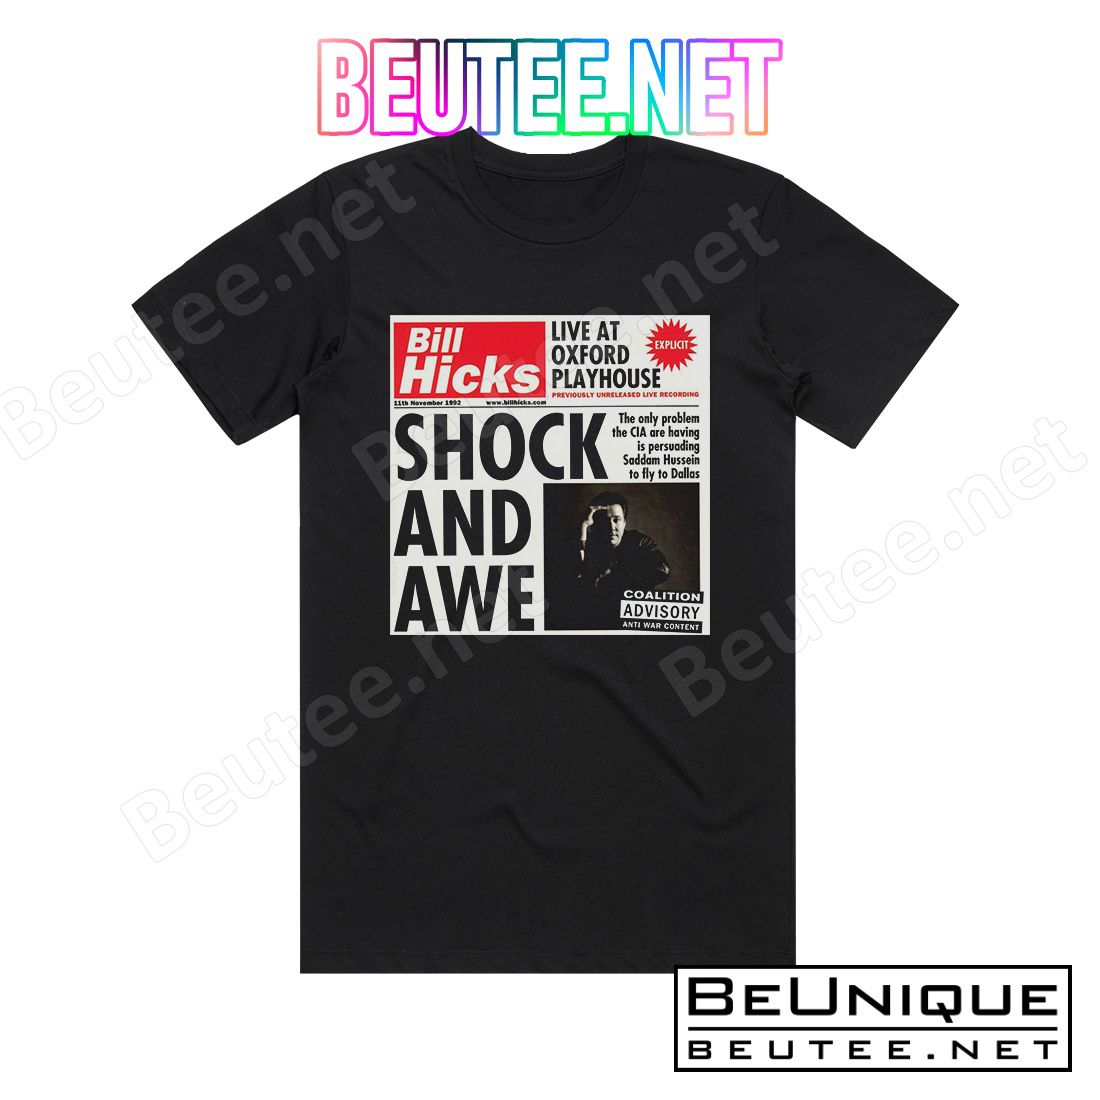 Bill Hicks Shock And Awe Album Cover T-Shirt